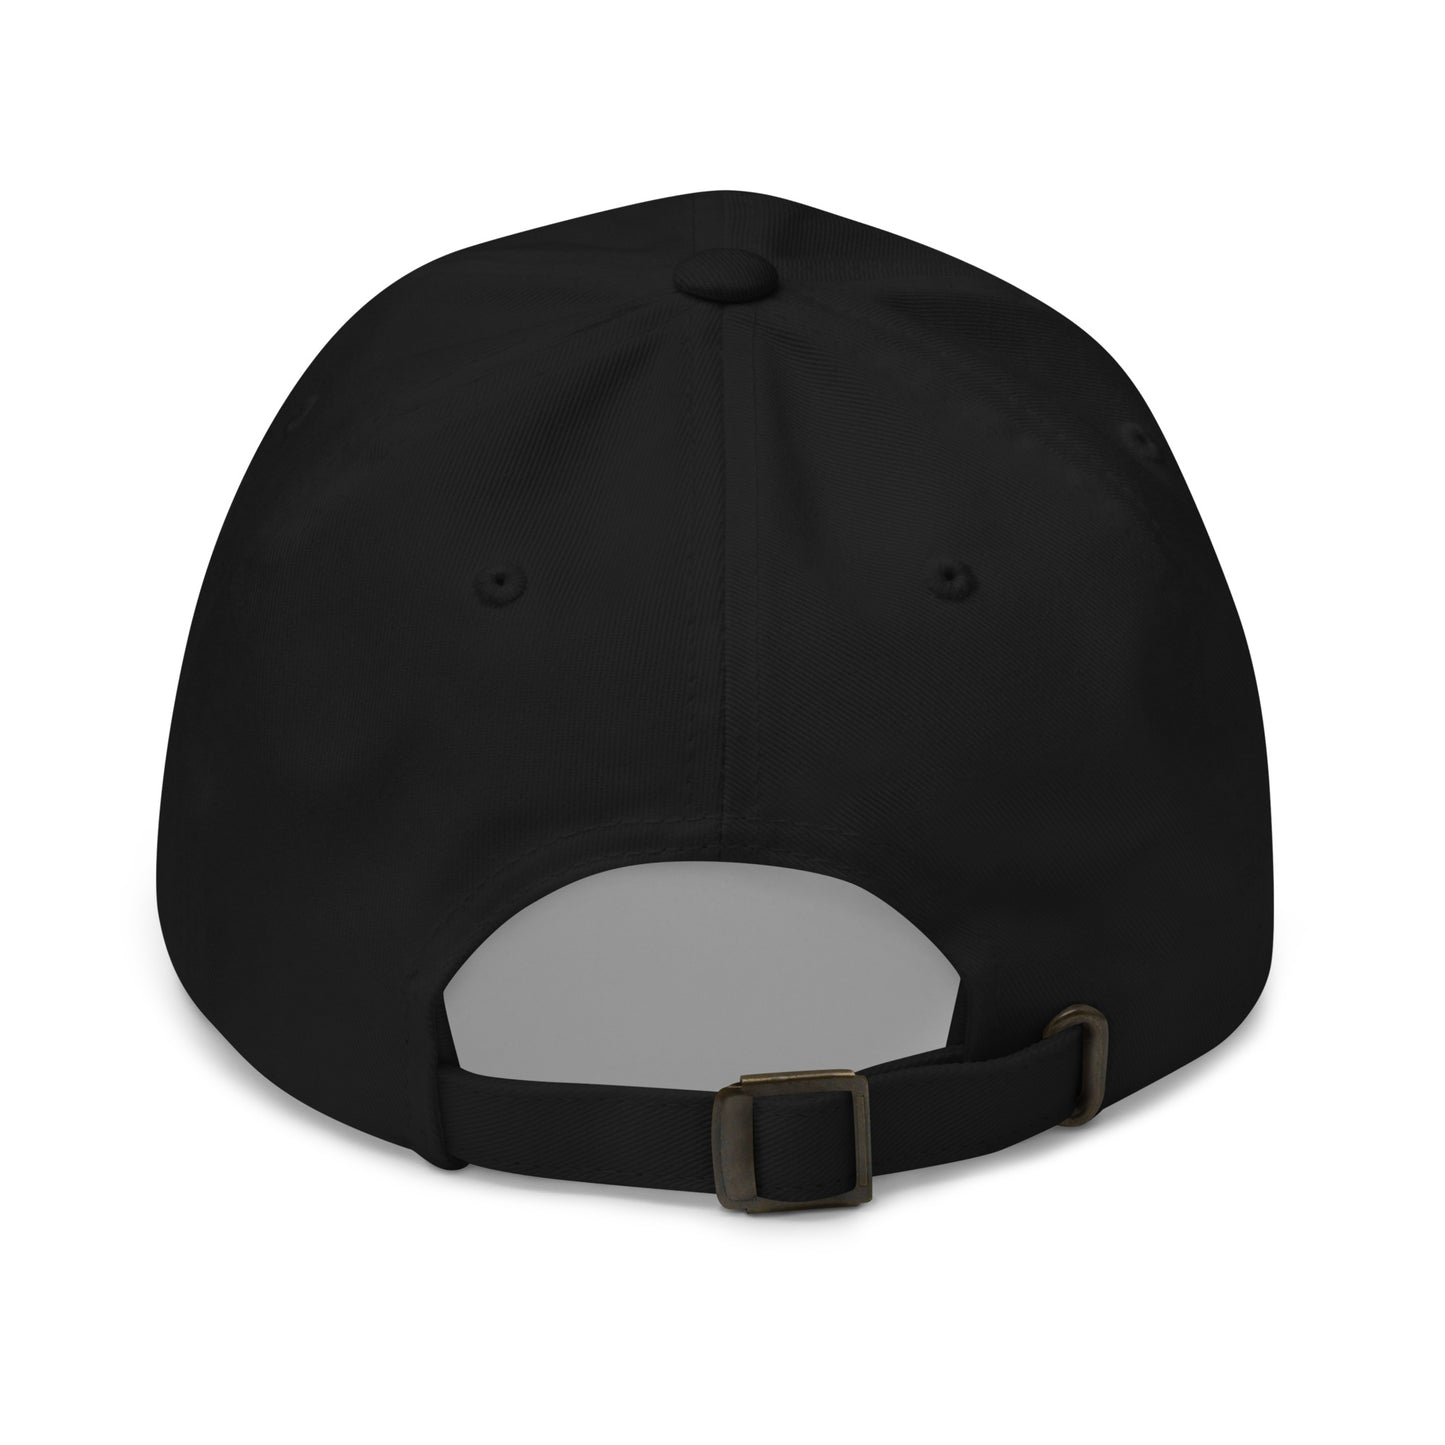 Gorra de Béisbol con logo Siempre Original bordado. Color Negro. Trasera.